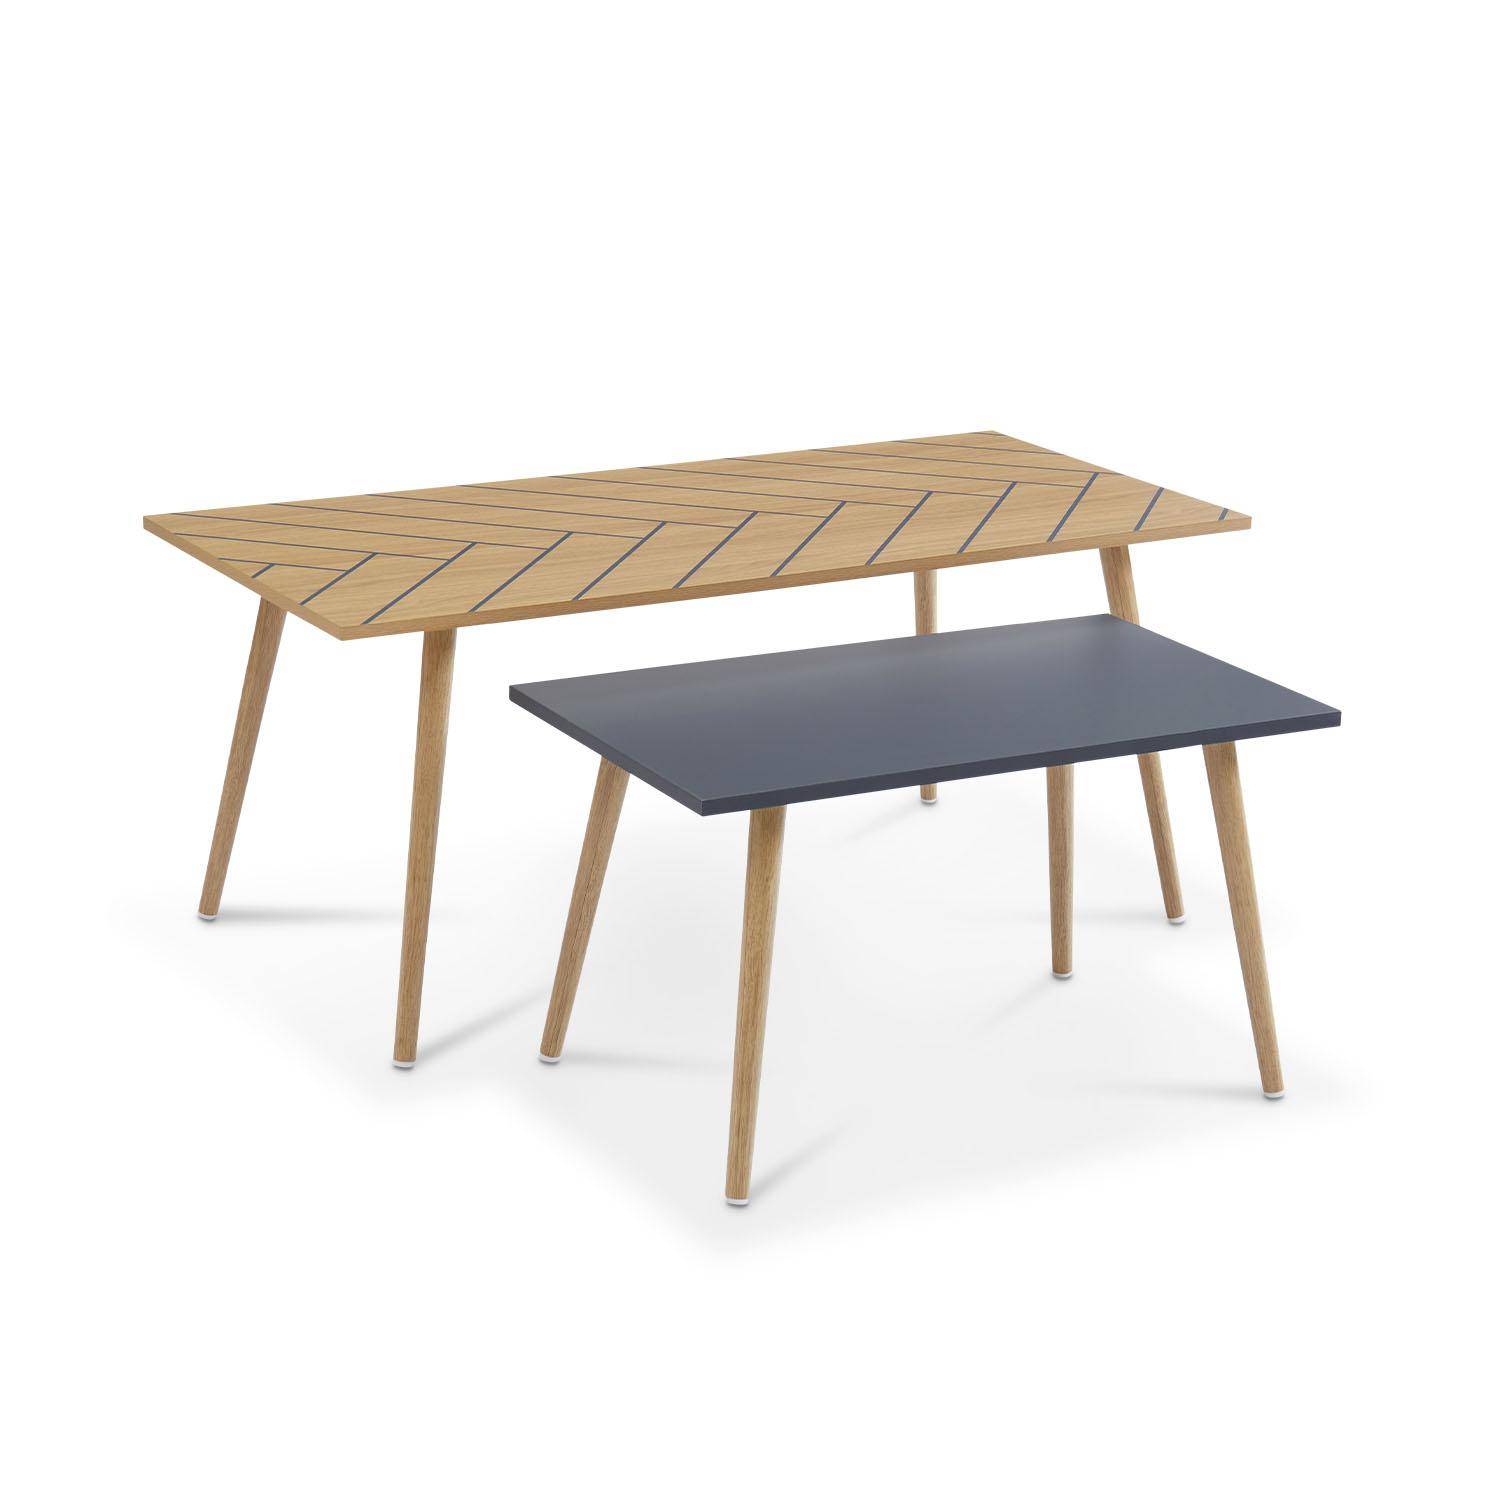 Conjunto de 2 mesas de centro natural y gris - 110x50x45,5cm y 70x40x39cm - Etnik - base de madera maciza de eucalipto, diseño escandinavo Photo1